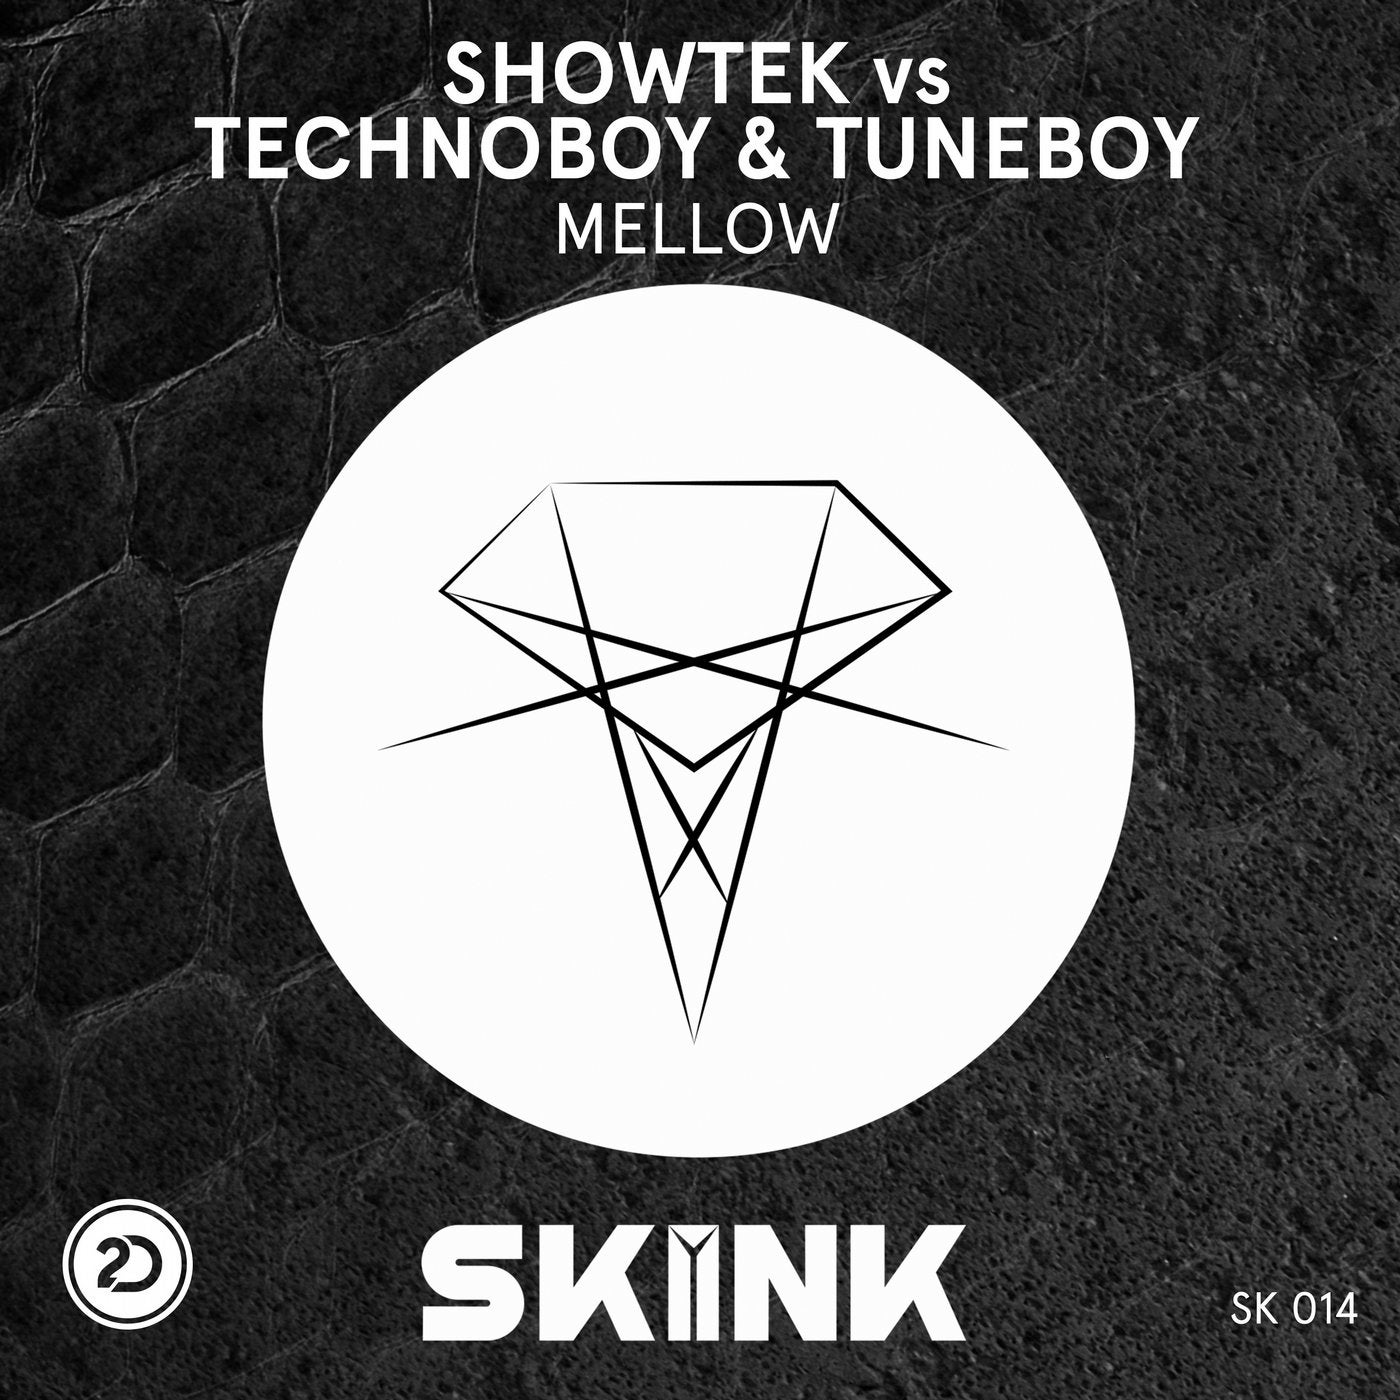 Showtek Music Download Beatport See showtek's singles & albums global chart performance, including offical music videos. showtek music download beatport